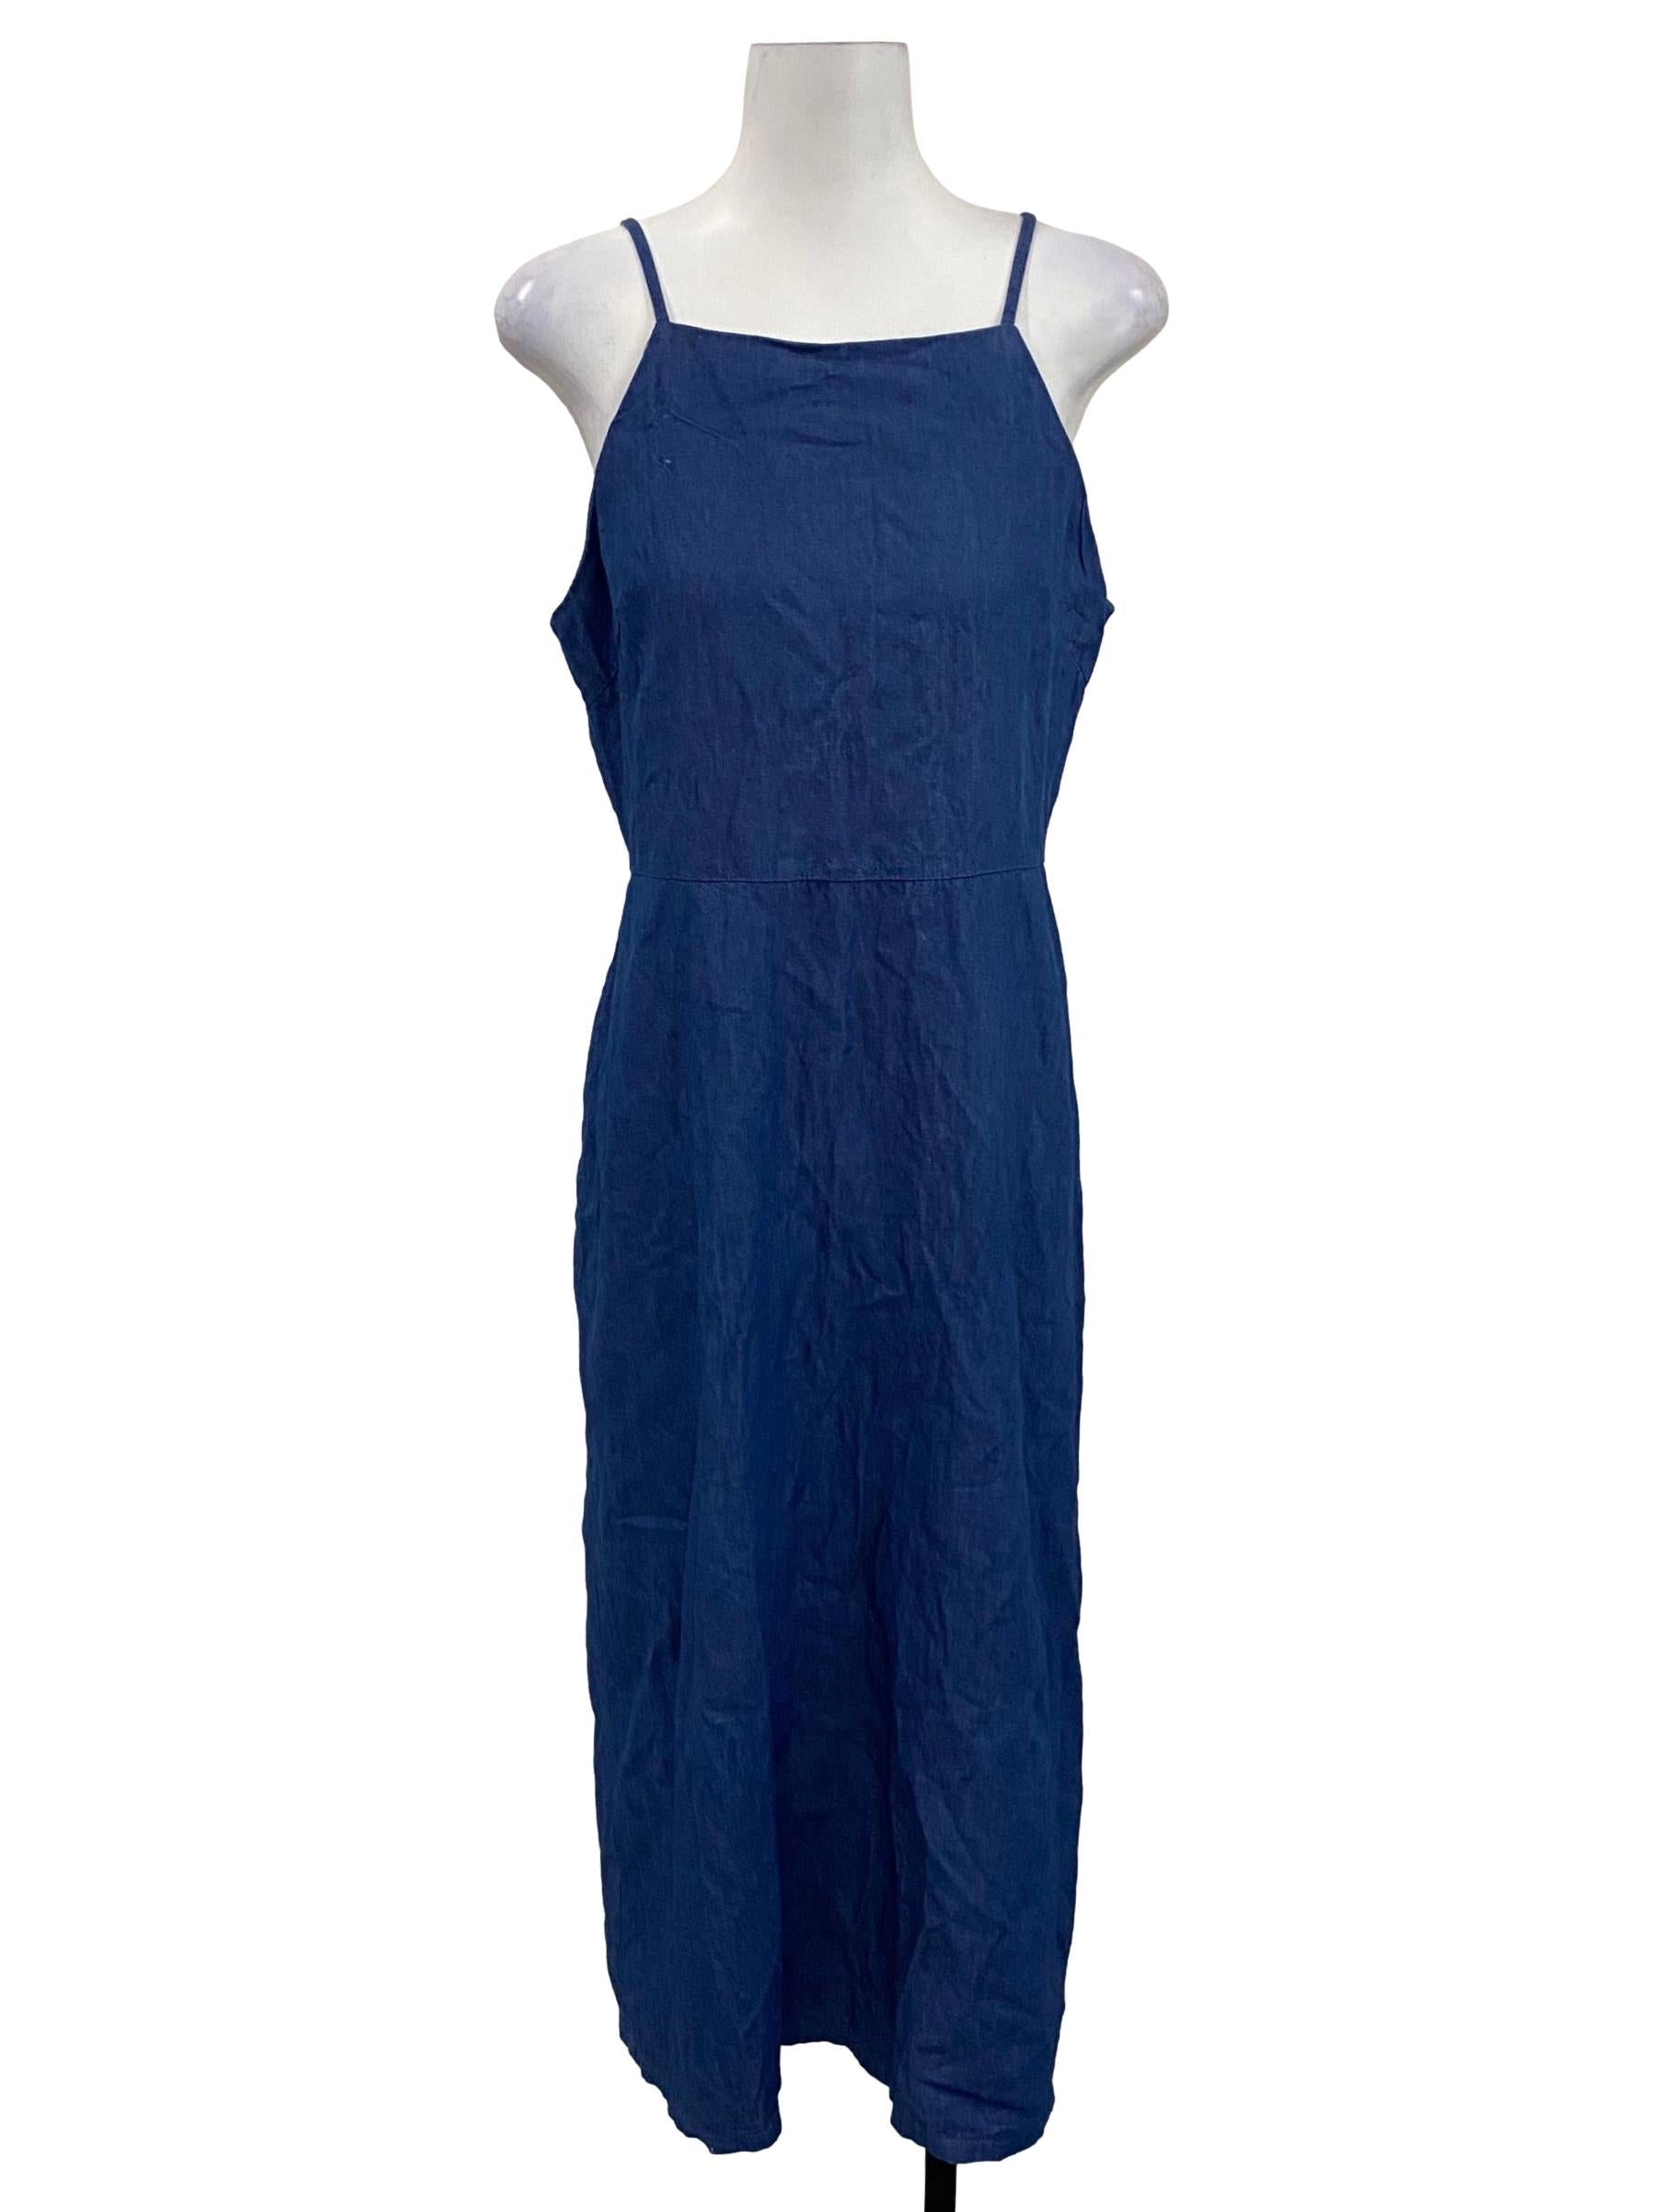 Blue Denim Strap Dress